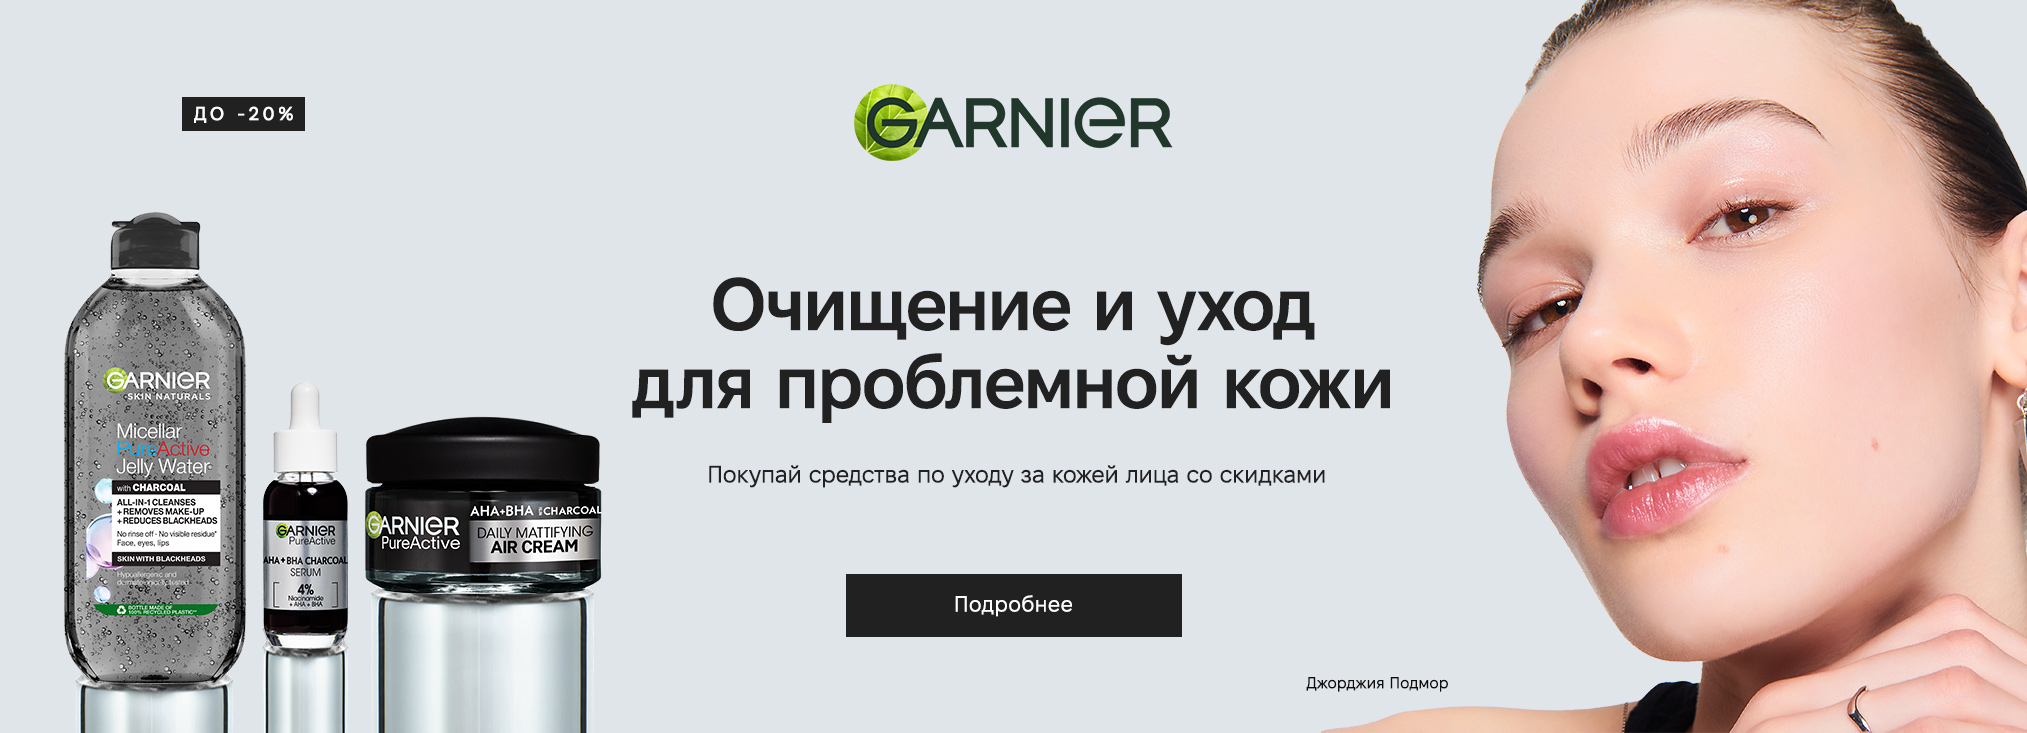 Garnier_actions